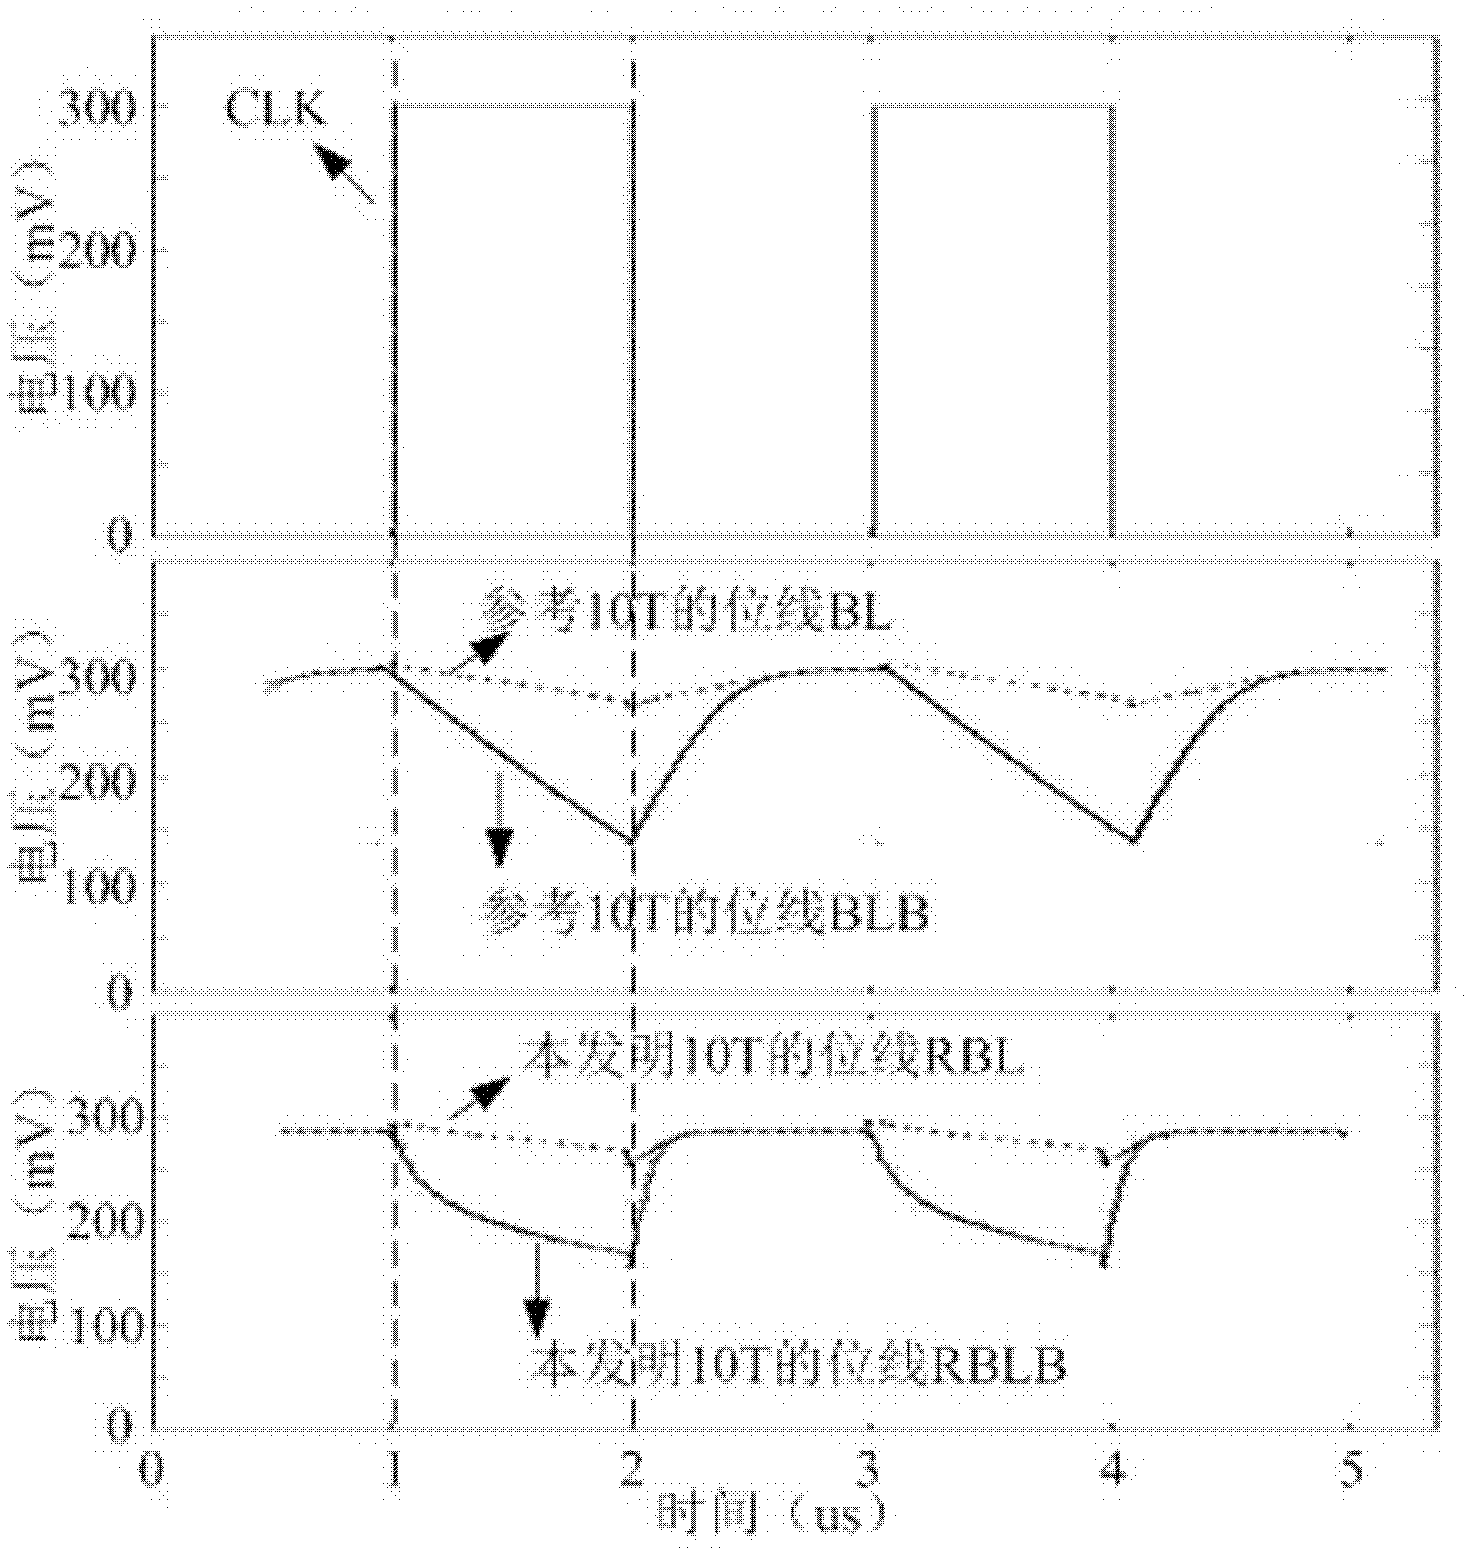 Double-bit-line sub-threshold storage unit circuit